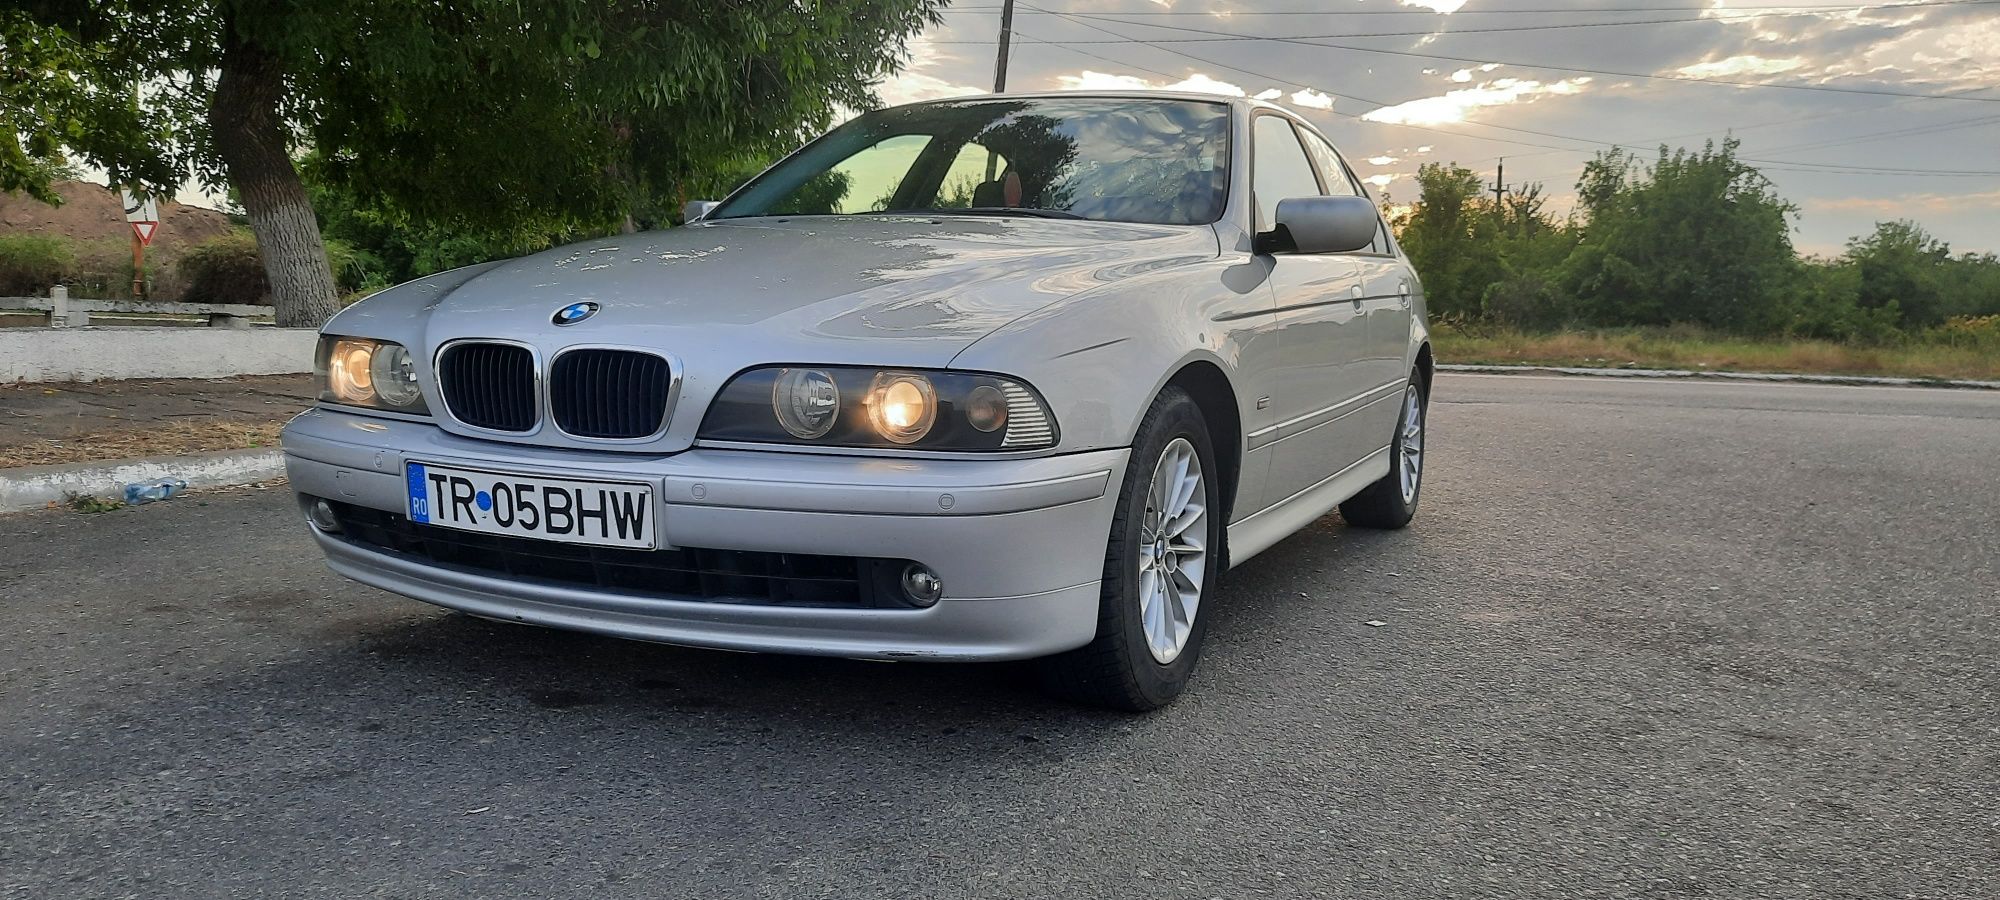 Vand BMW E39 525d facelift